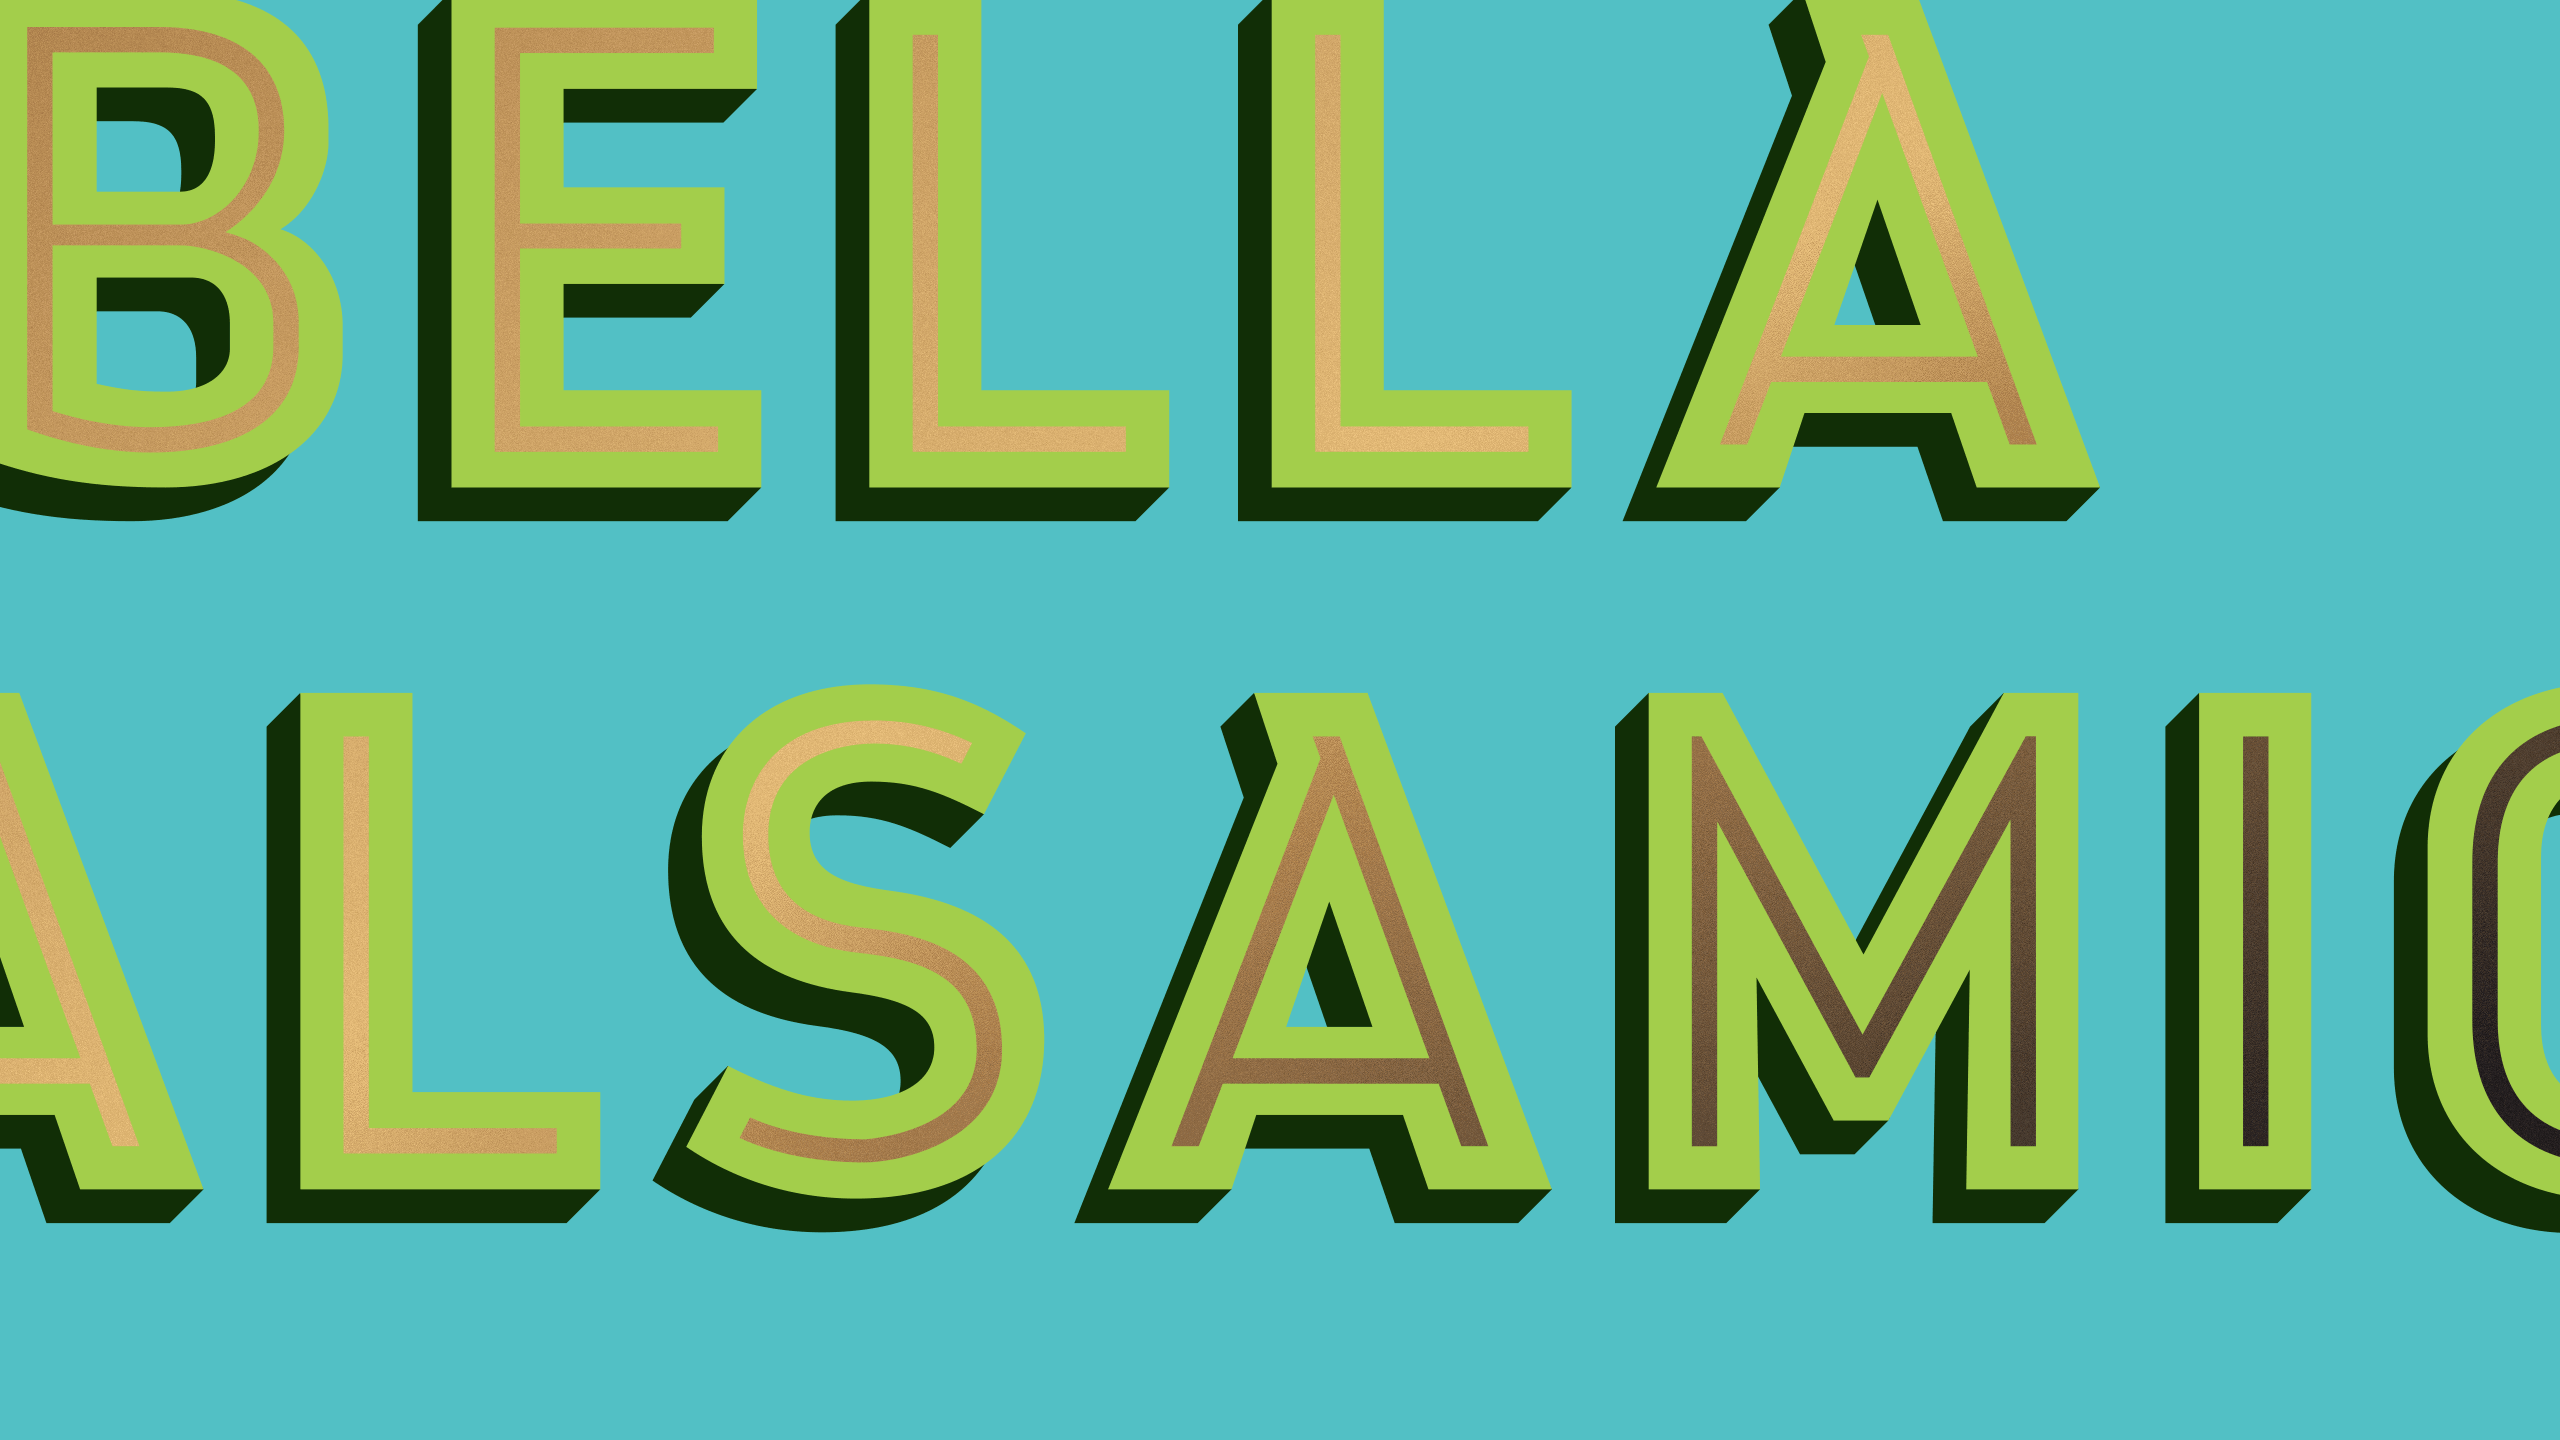 Bella Balsamic type